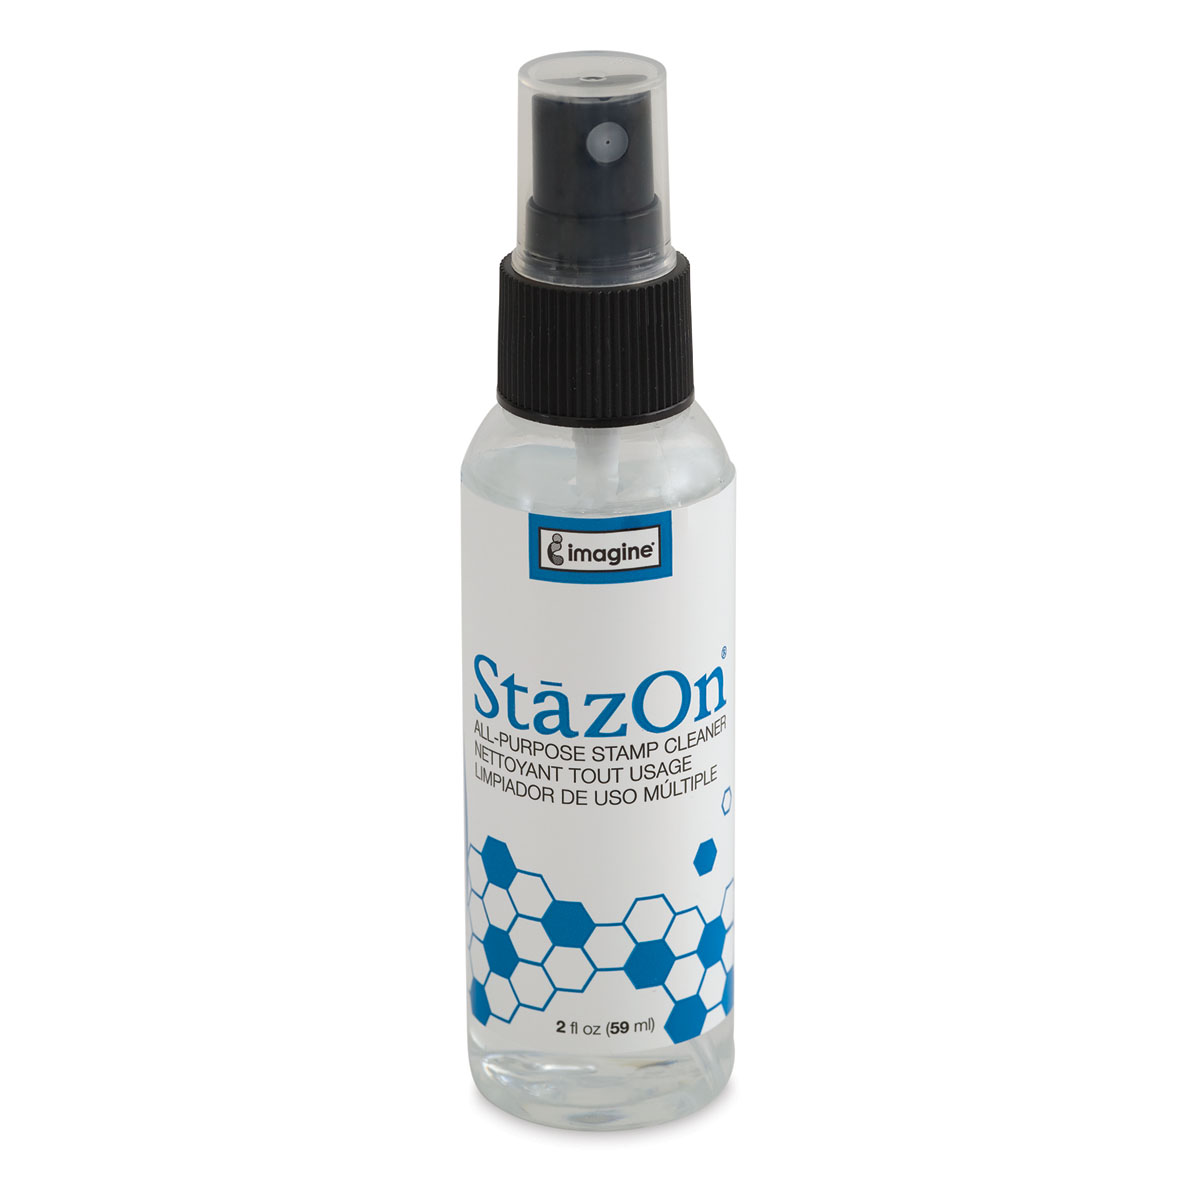 StazOn All-Purpose Cleaner Dauber 2oz